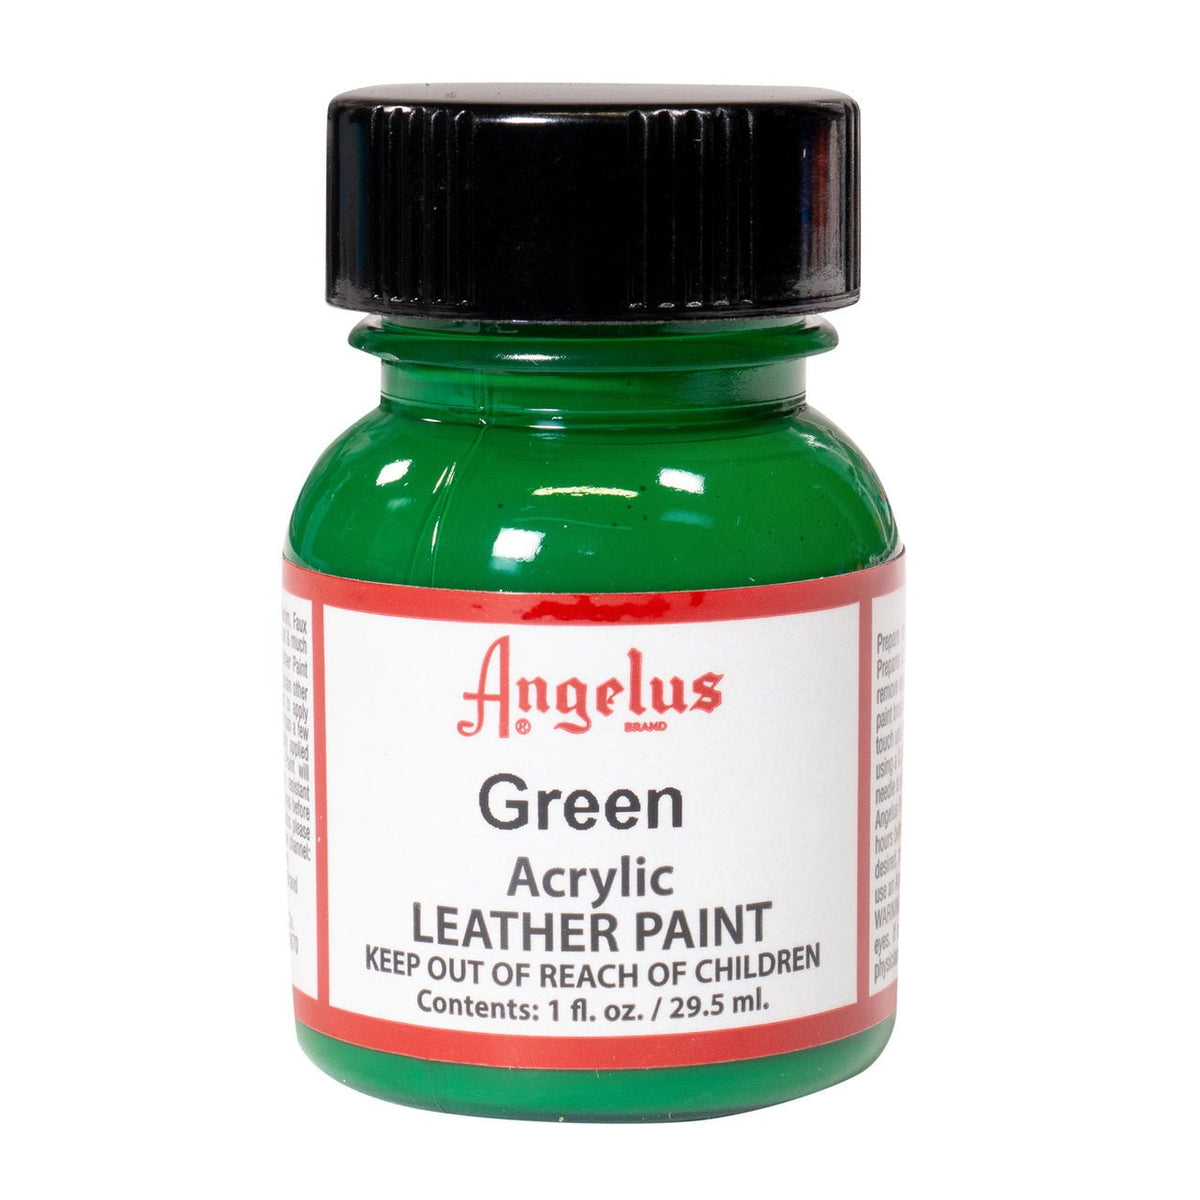 Angelus Acrylic Leather Paint - 1 oz. Bottle - Green - merriartist.com